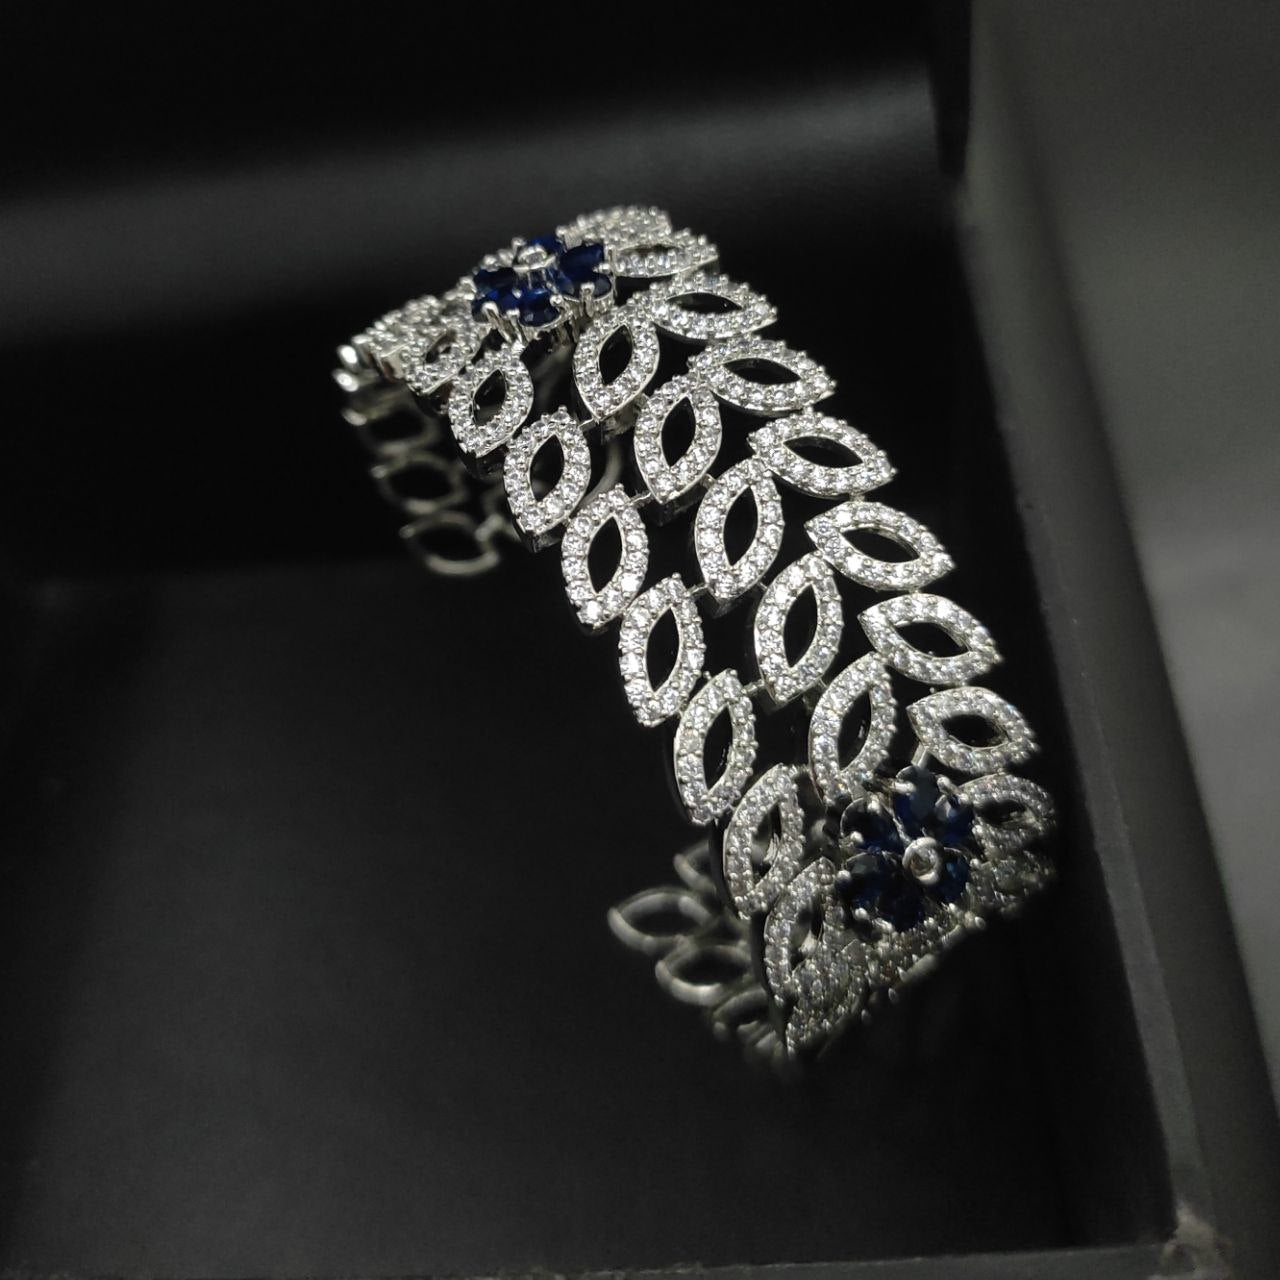 Premium quality American Diamond adjustable bracelet